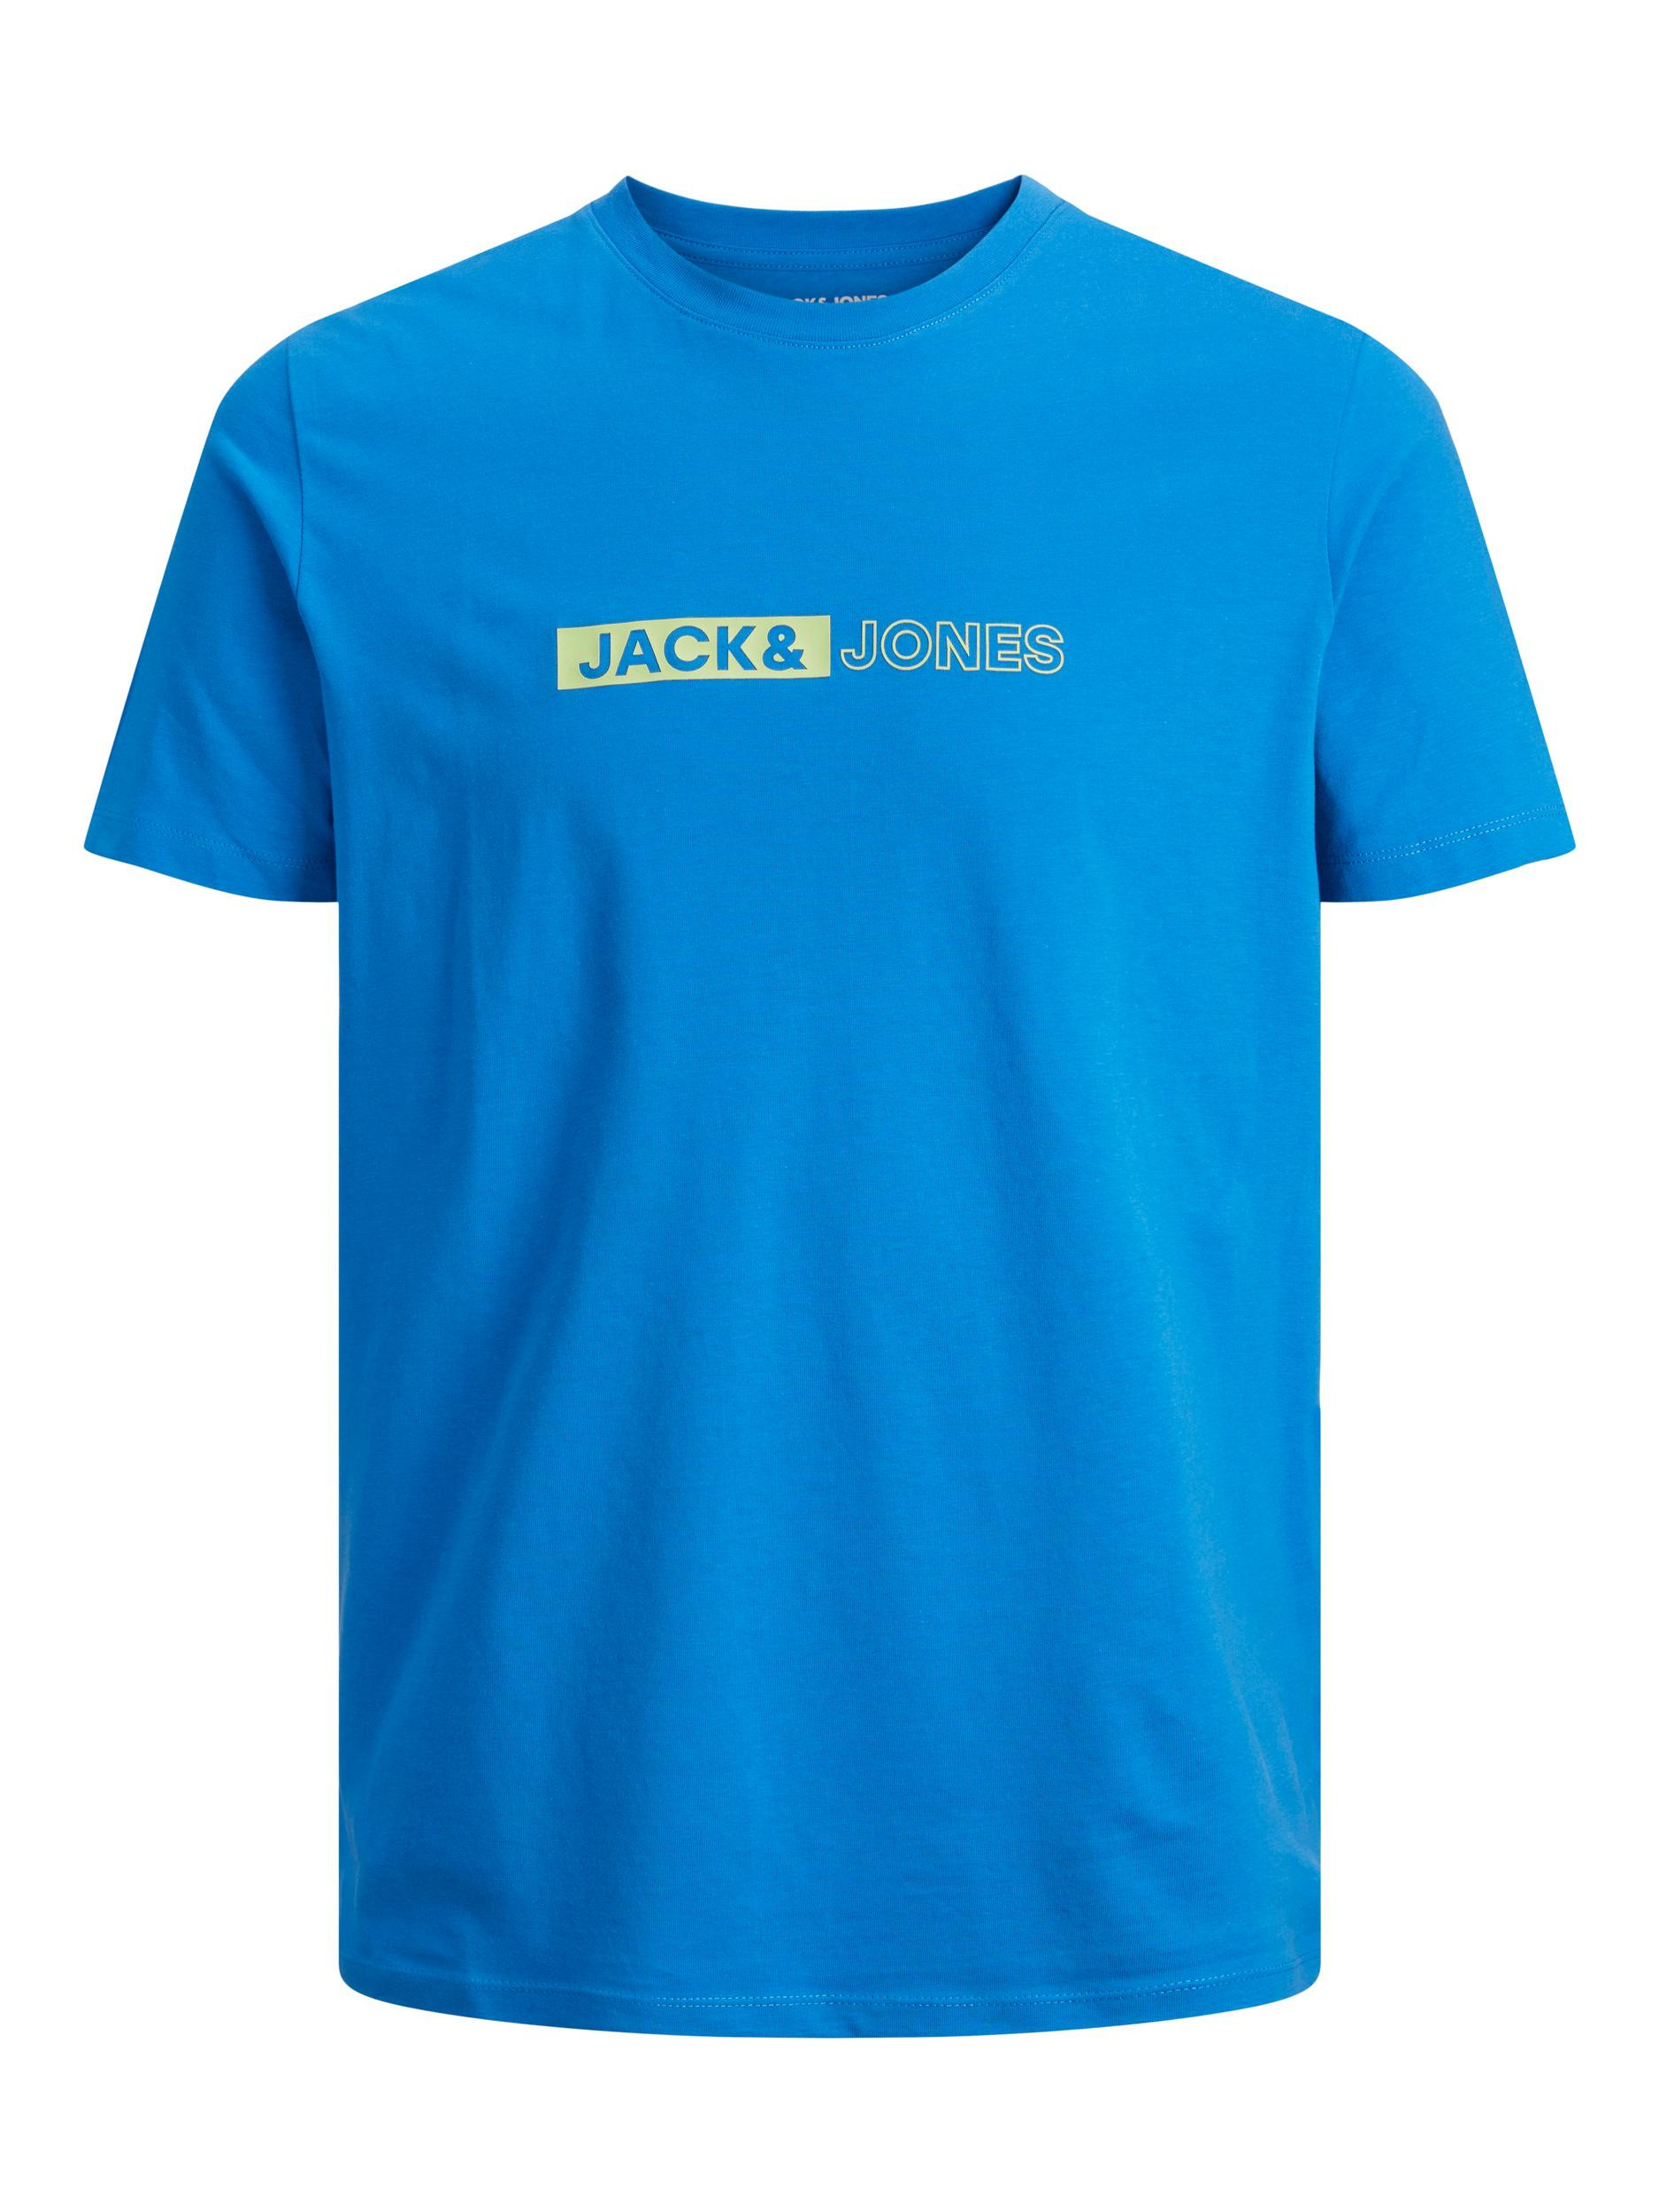 Jack & Jones - T-shirt regular fit in cotone, Blu bluette, large image number 0